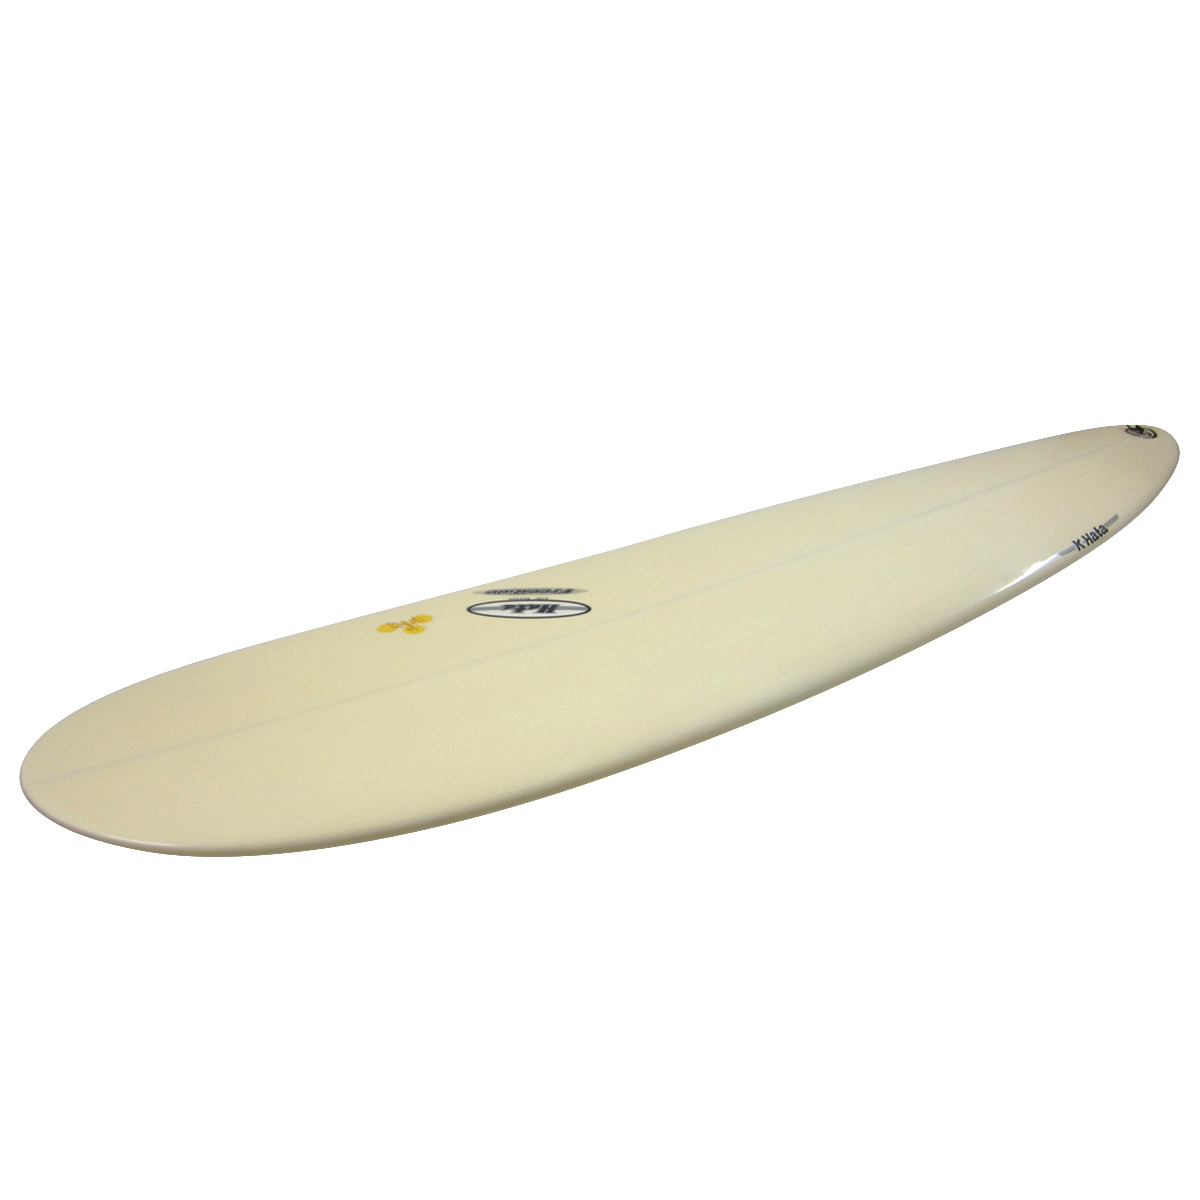 HATA SURFBOARDS / 9`1 Custom shaped by Kunio Hata 